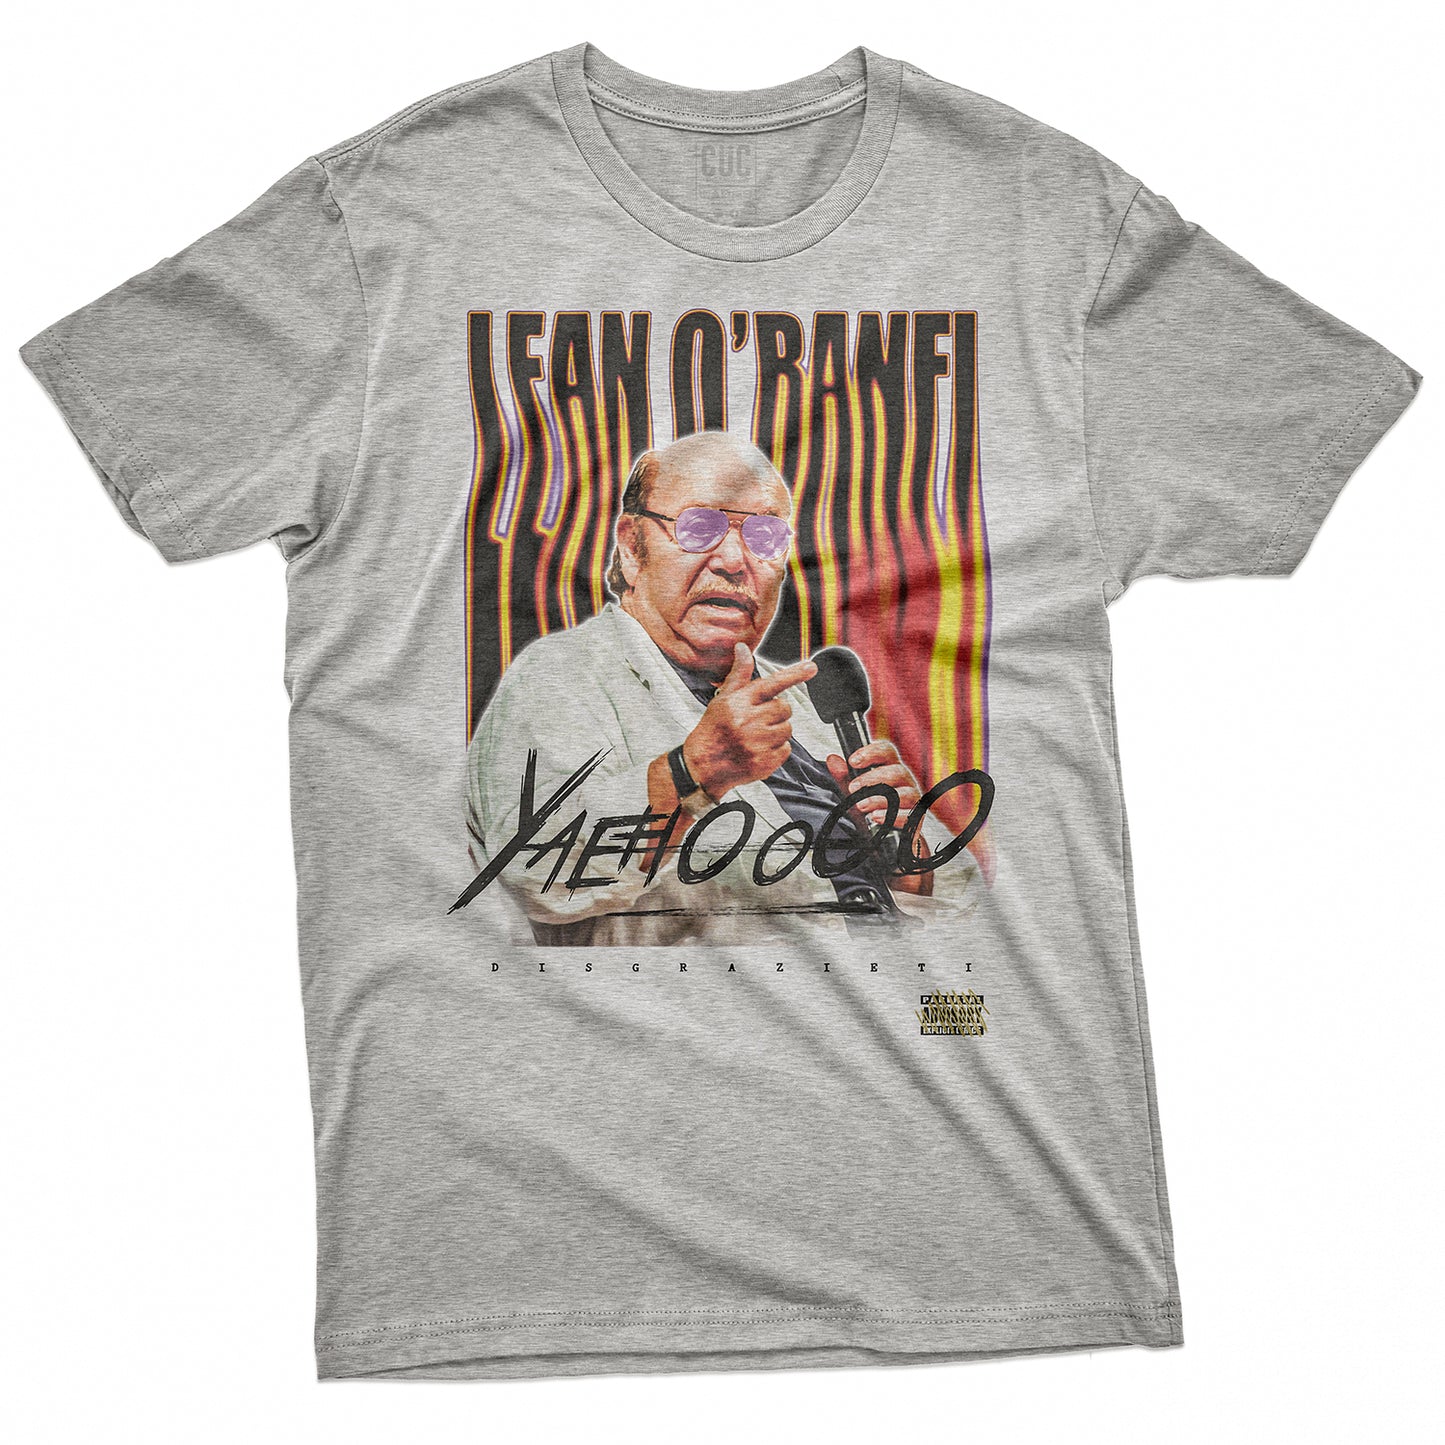 CUC T-Shirt LEAN O BANFI LIGHT - Sanremo - Meme - Trap  #chooseurcolor